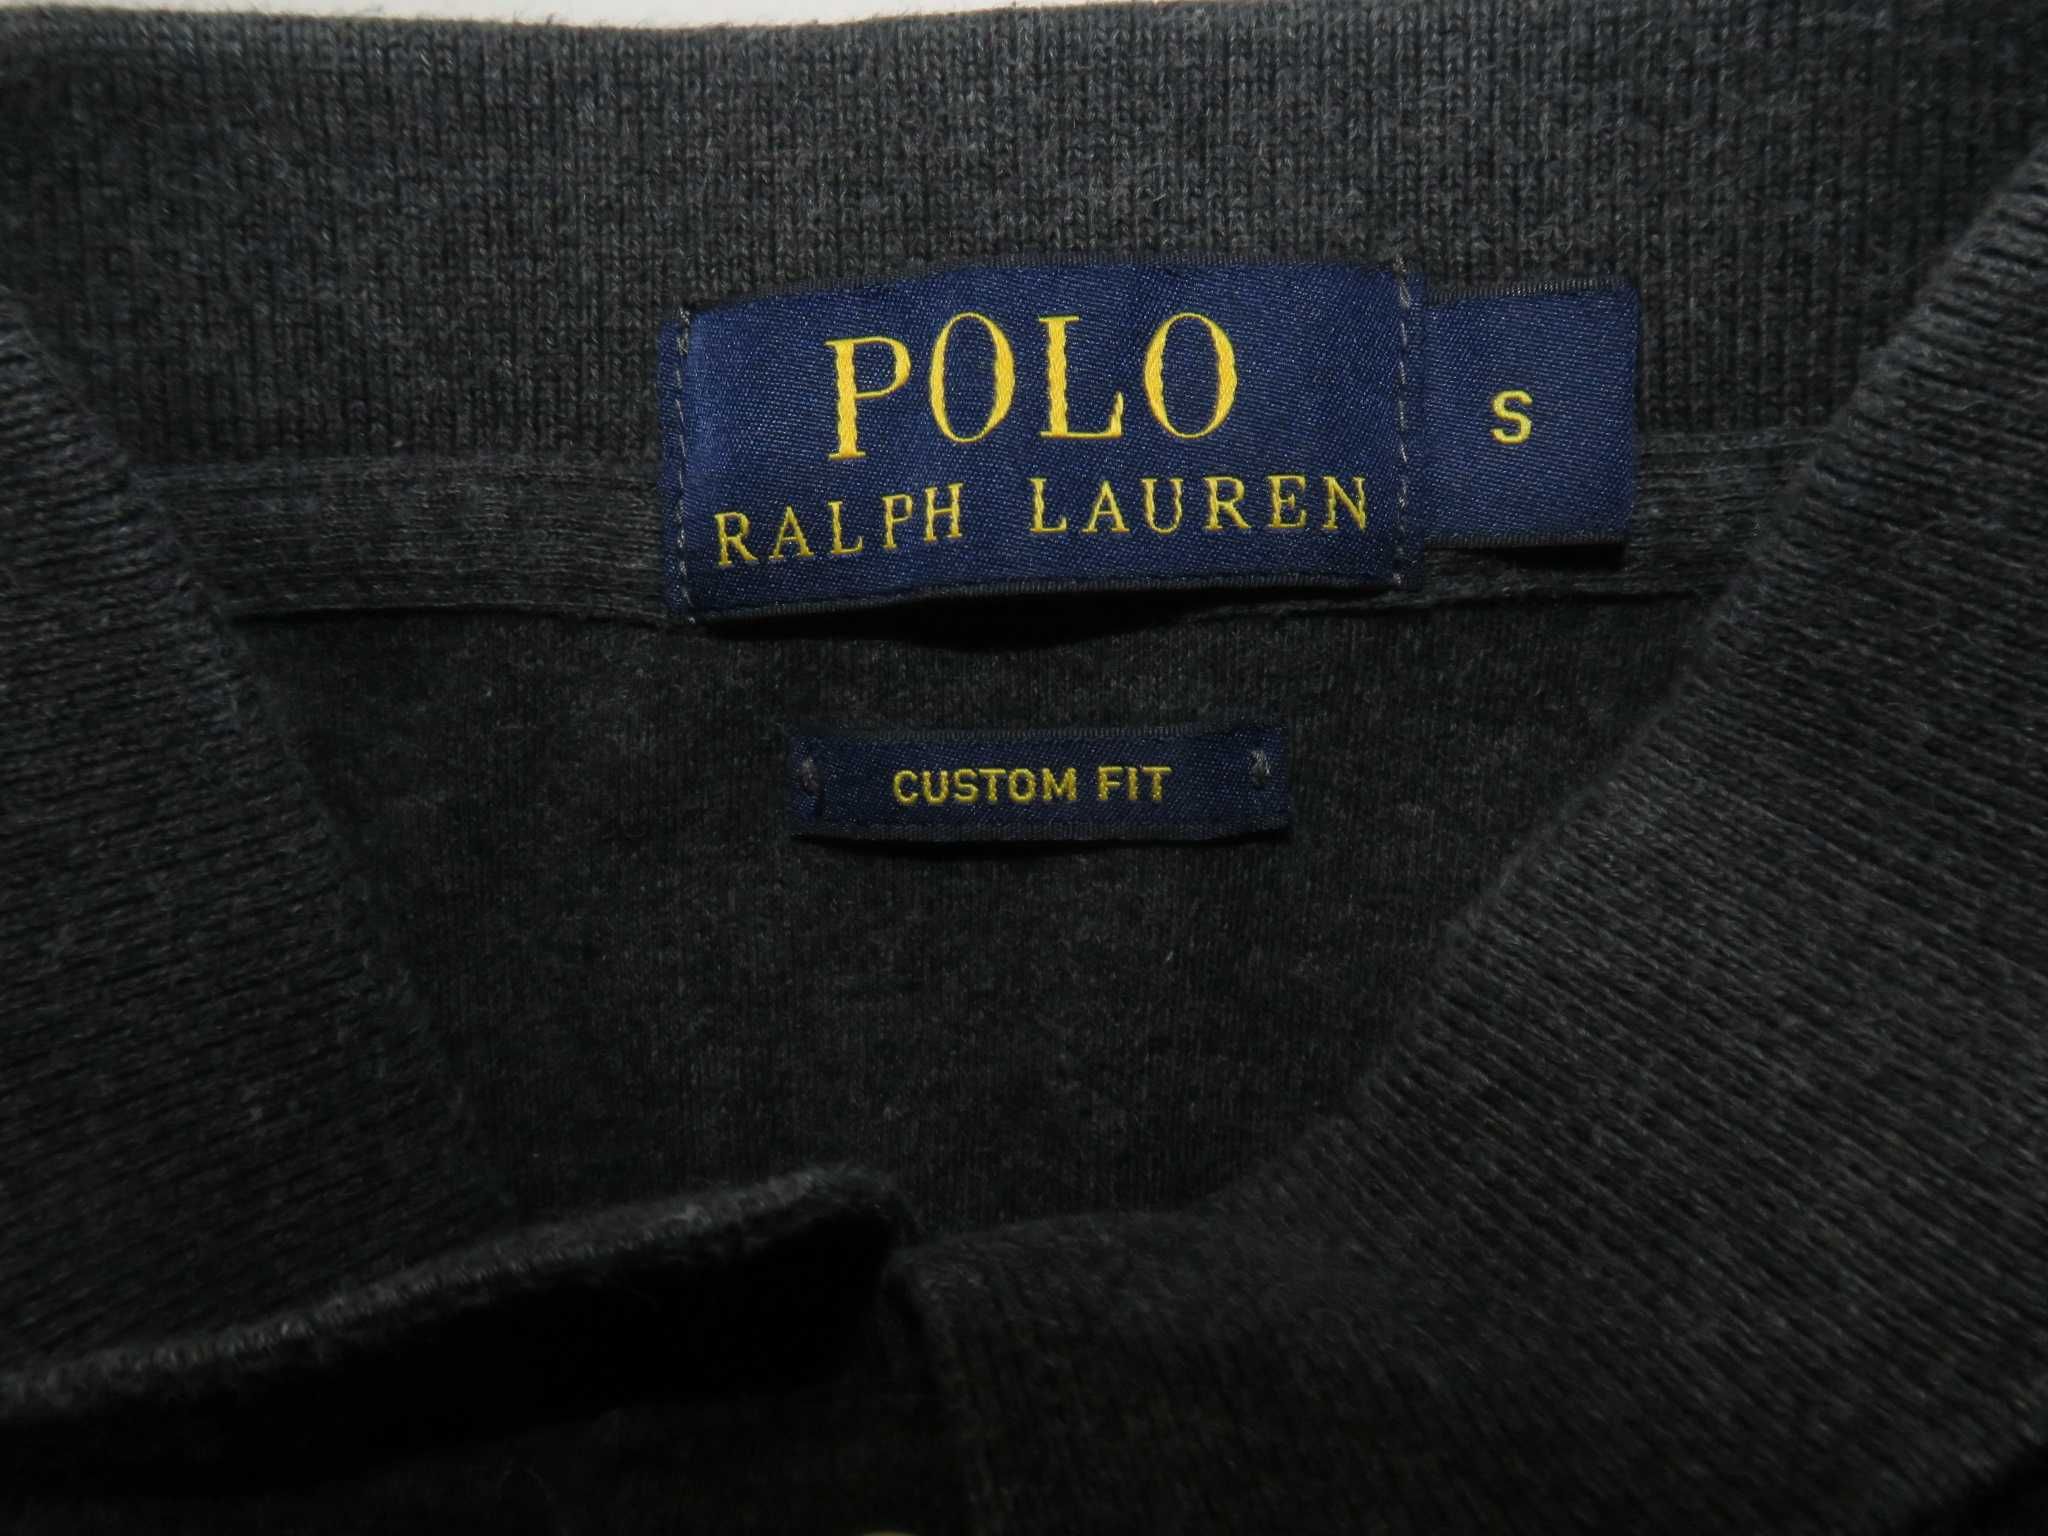 Ralph Lauren koszulka polo polówka nowsze kolekcje S